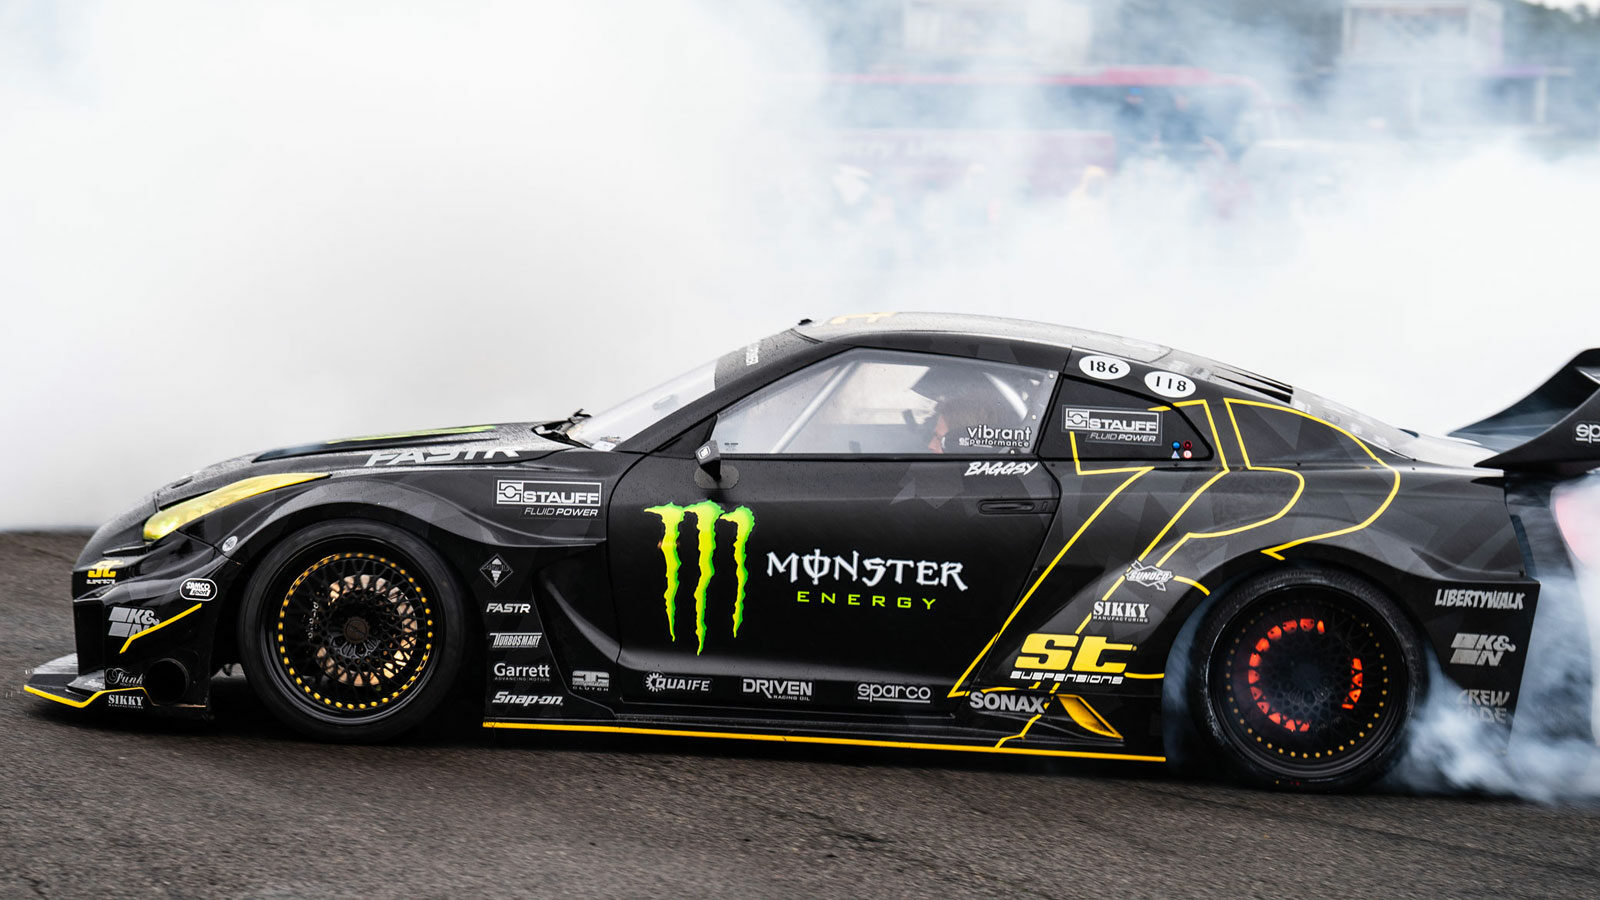 24 Stunden Nürburgring: Offiziell: Monster Energy wird Partner der 24 Stunden am Nürburgring